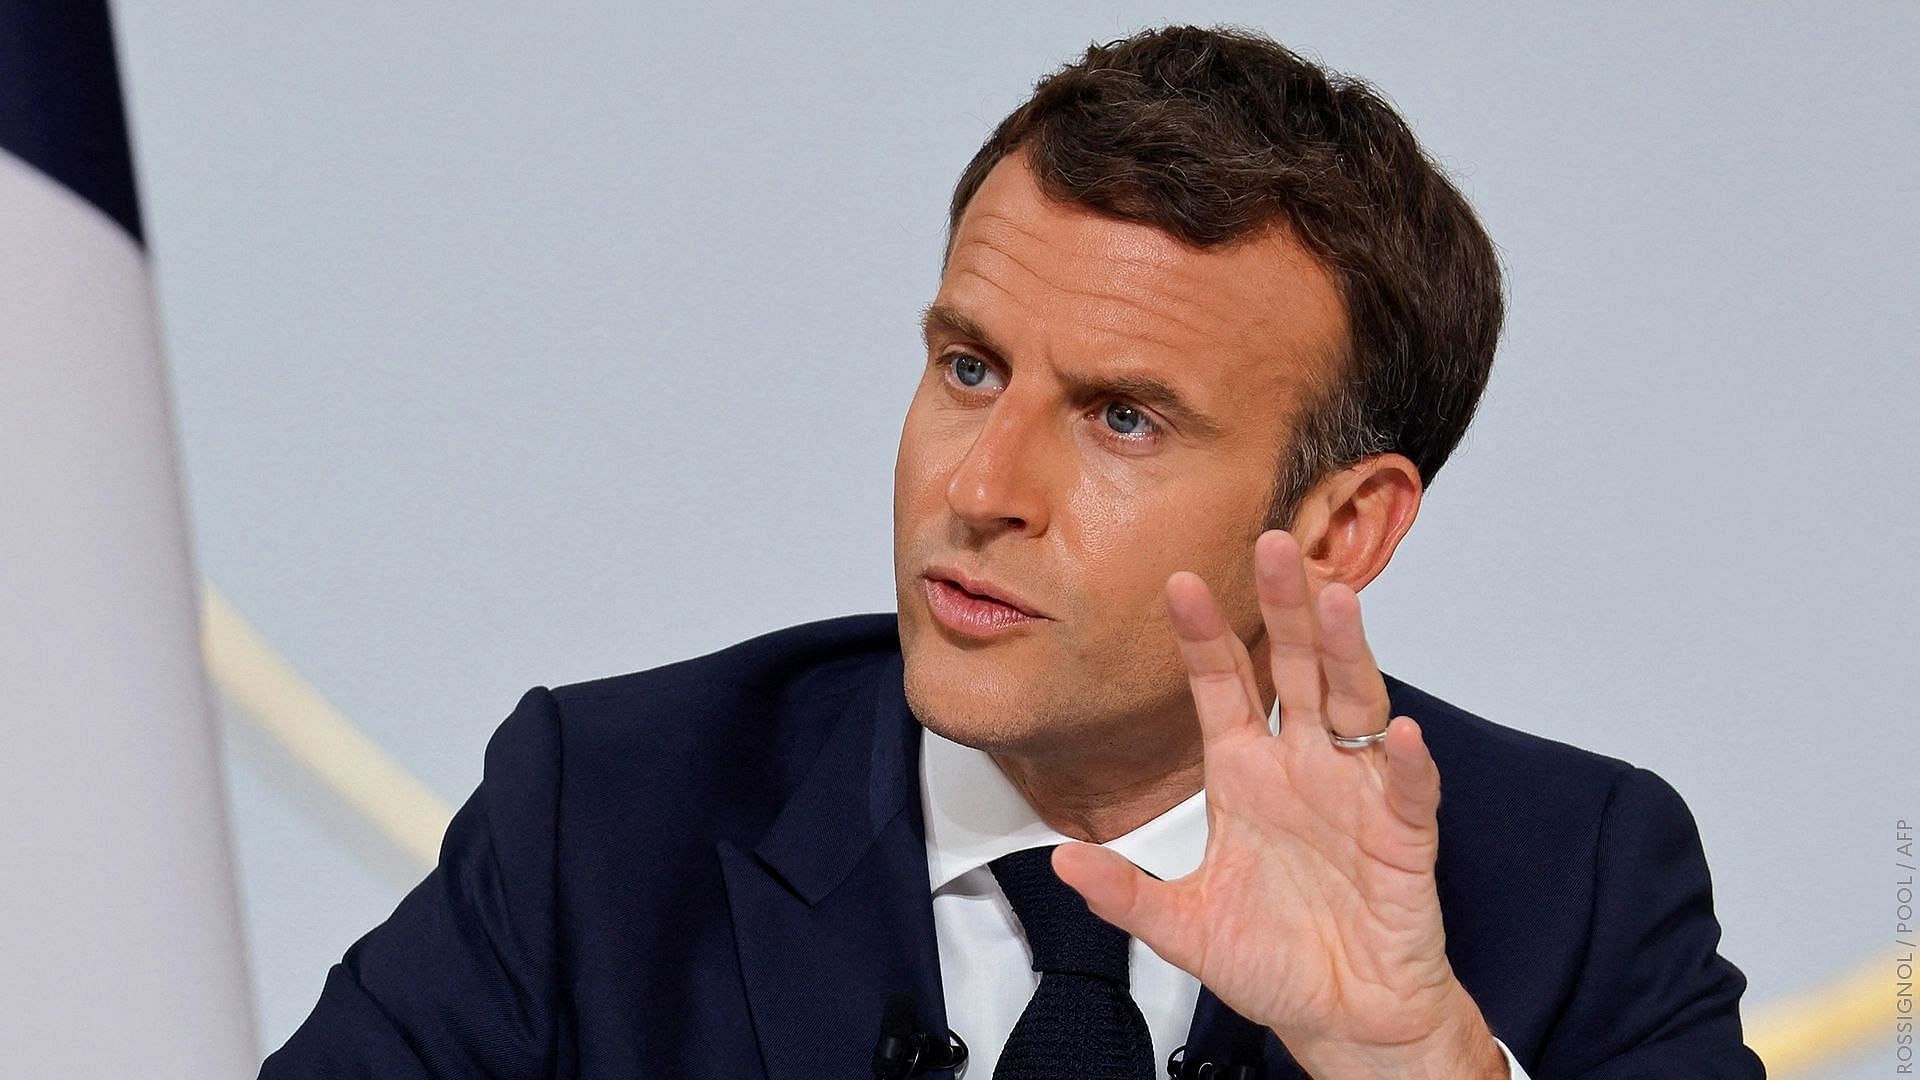 <div class="paragraphs"><p>फ्रांस के राष्ट्रपति&nbsp;Emmanuel Macron</p></div>